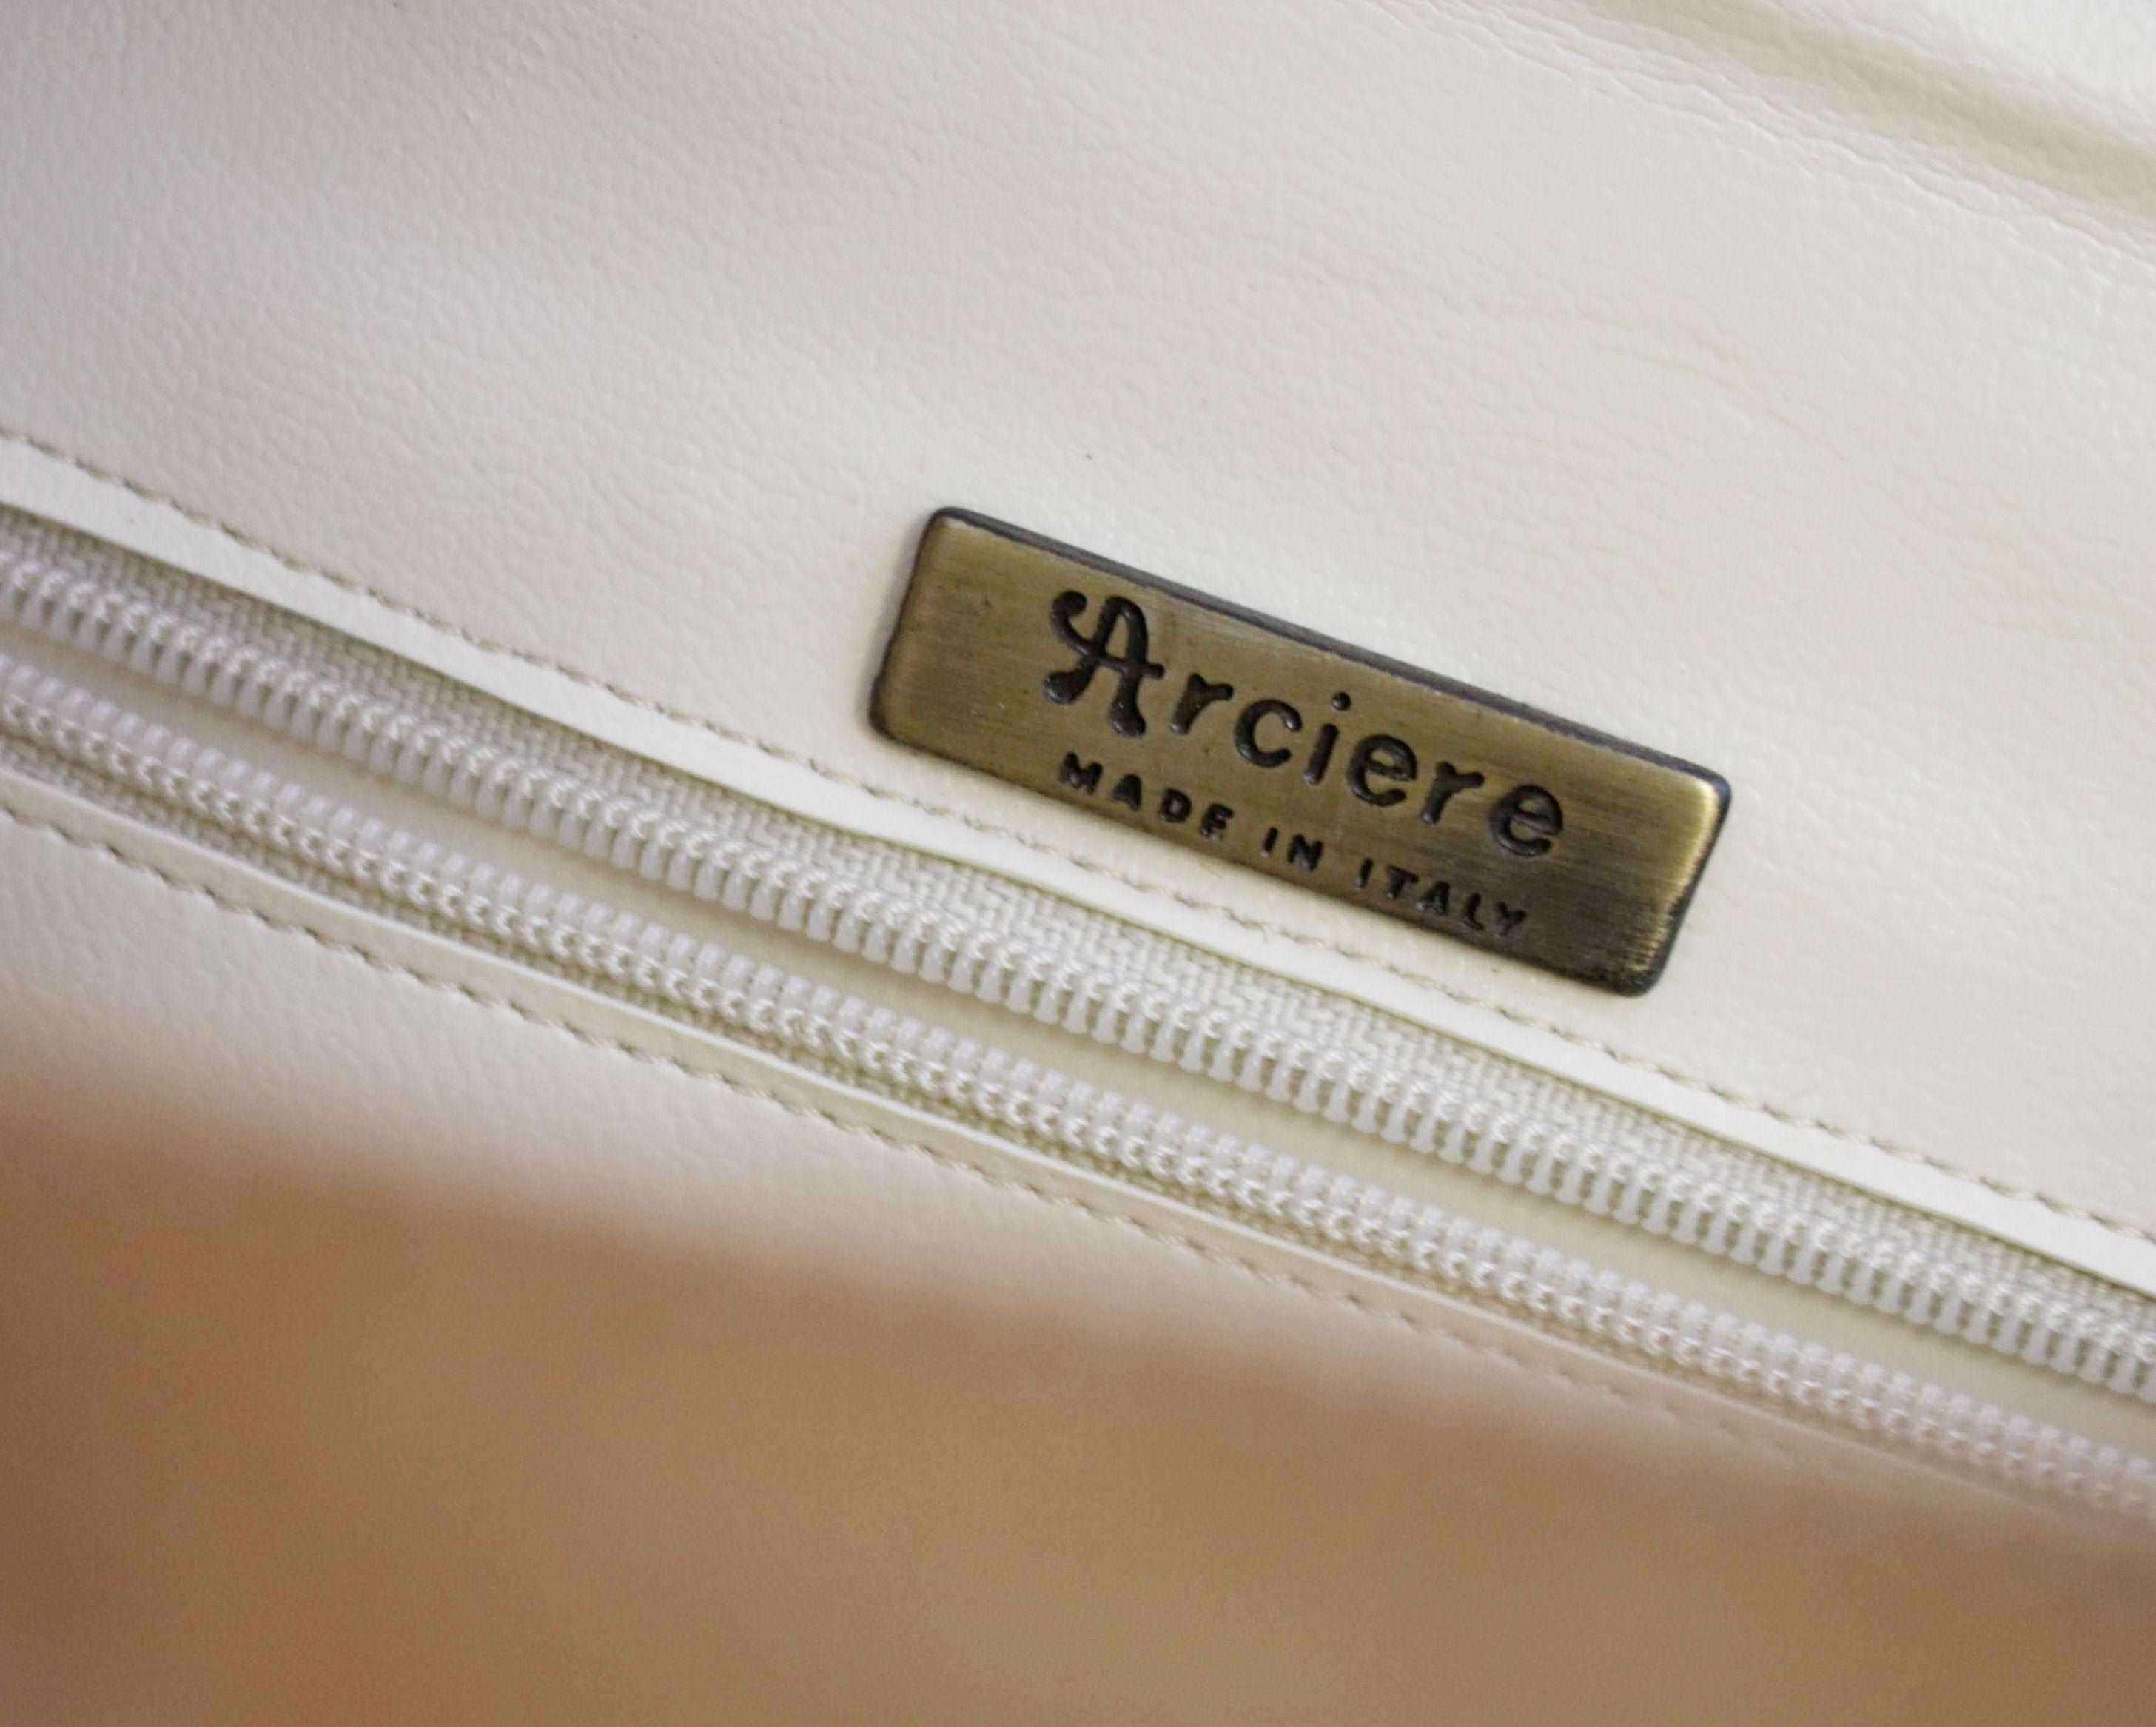 Arciere Italian Vintage Bag: An Emblem of Italian Craftsmanship